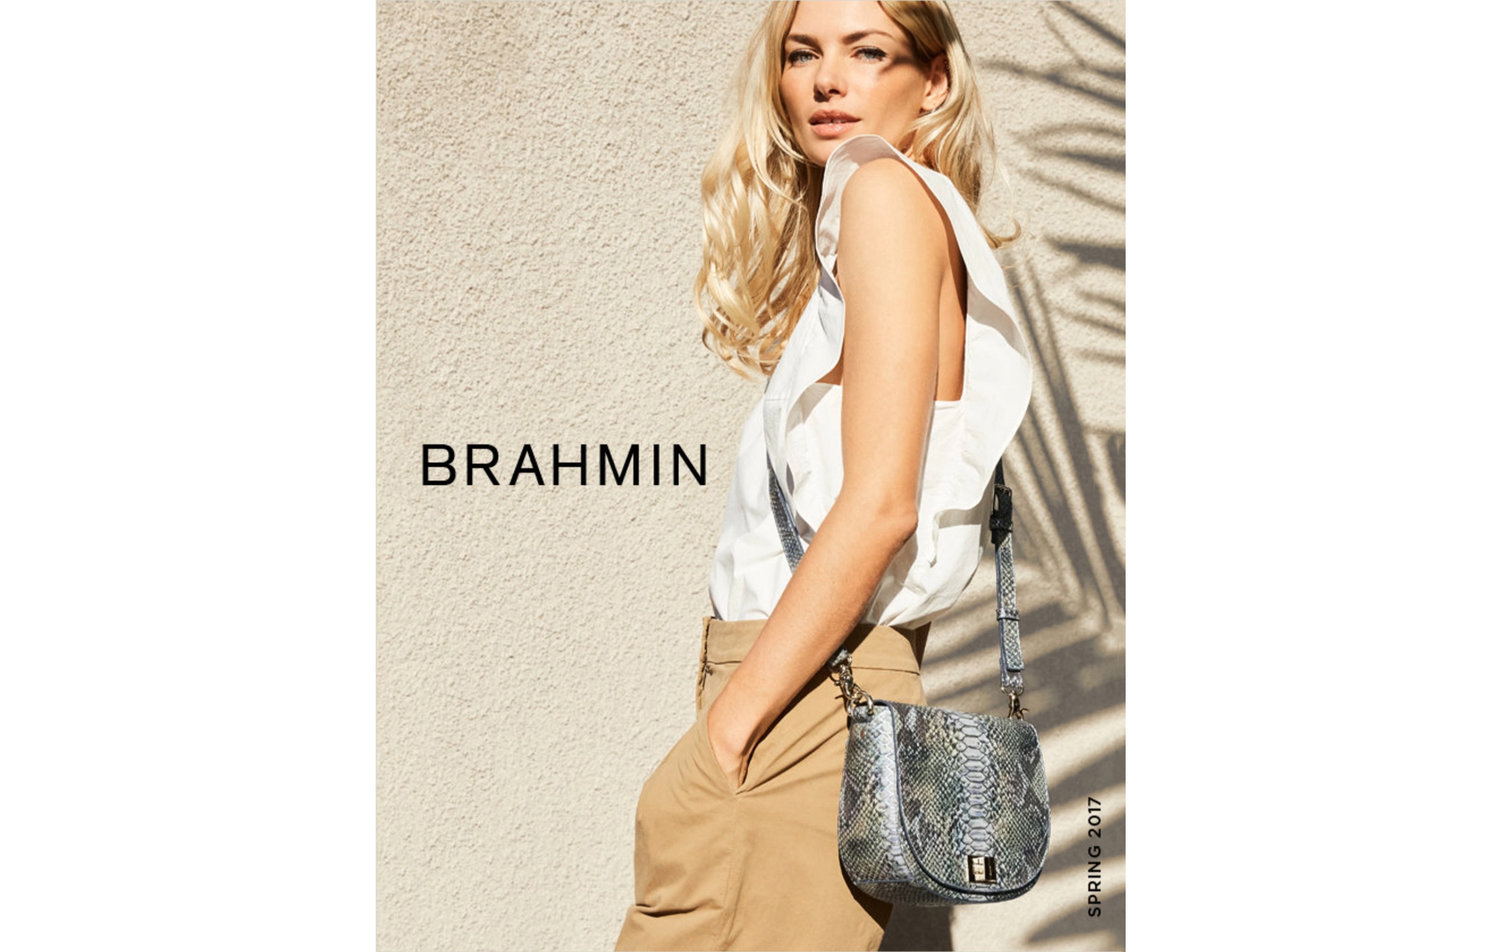 Brahmin Handbags (@brahmin) • Instagram photos and videos